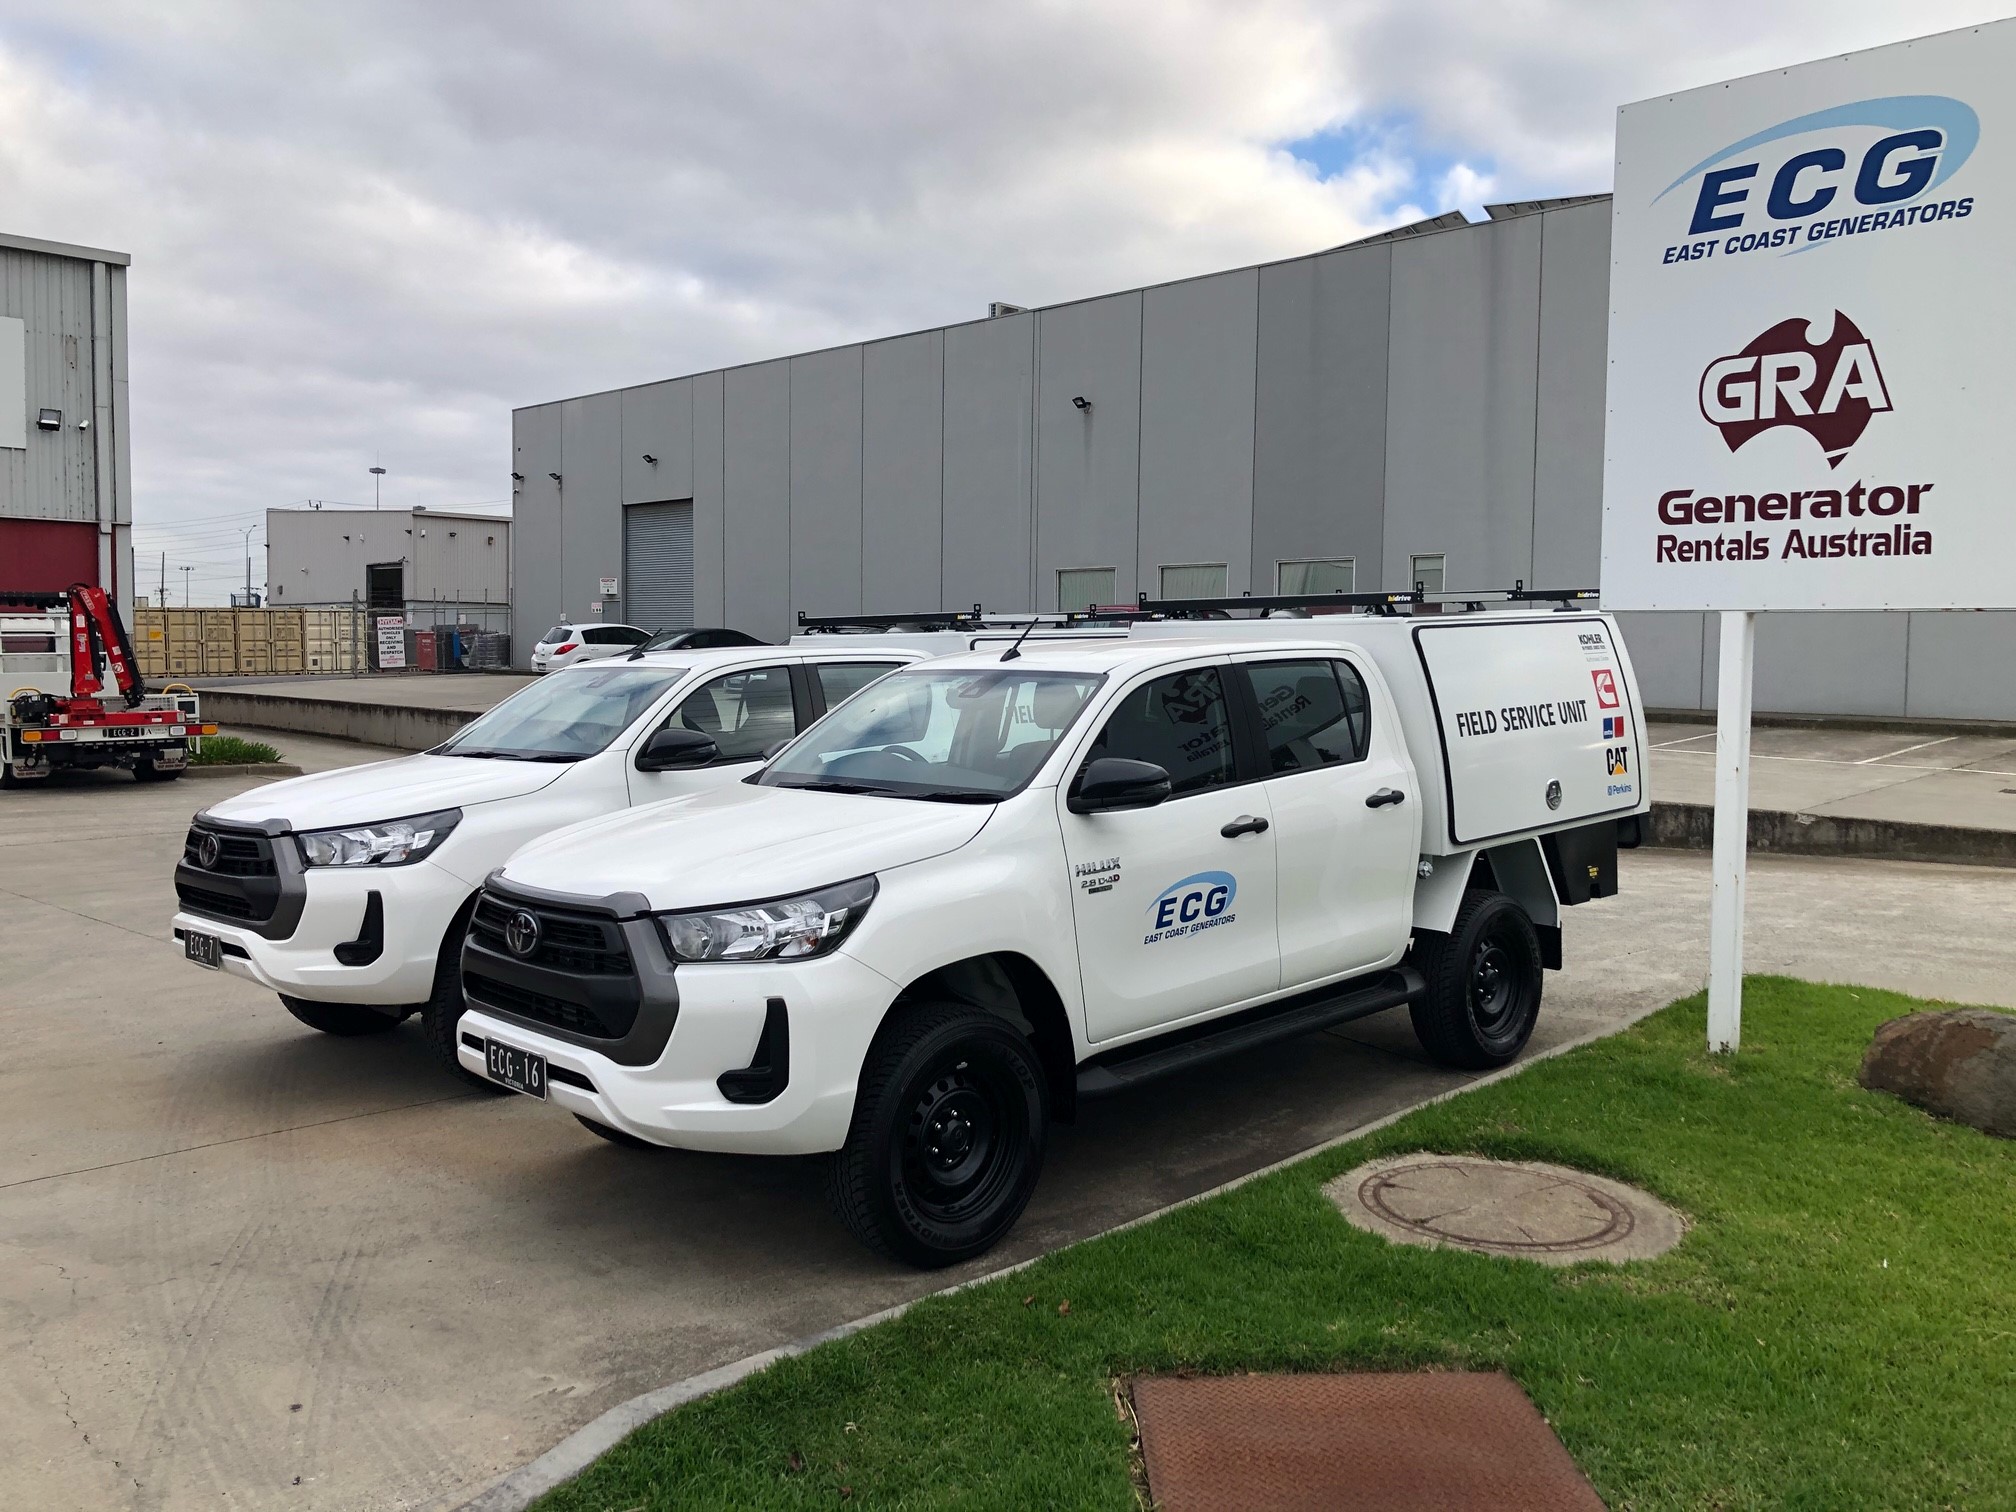 East Coast Generators new Toyota Hilux Fleet with Hidrive quality service bodies